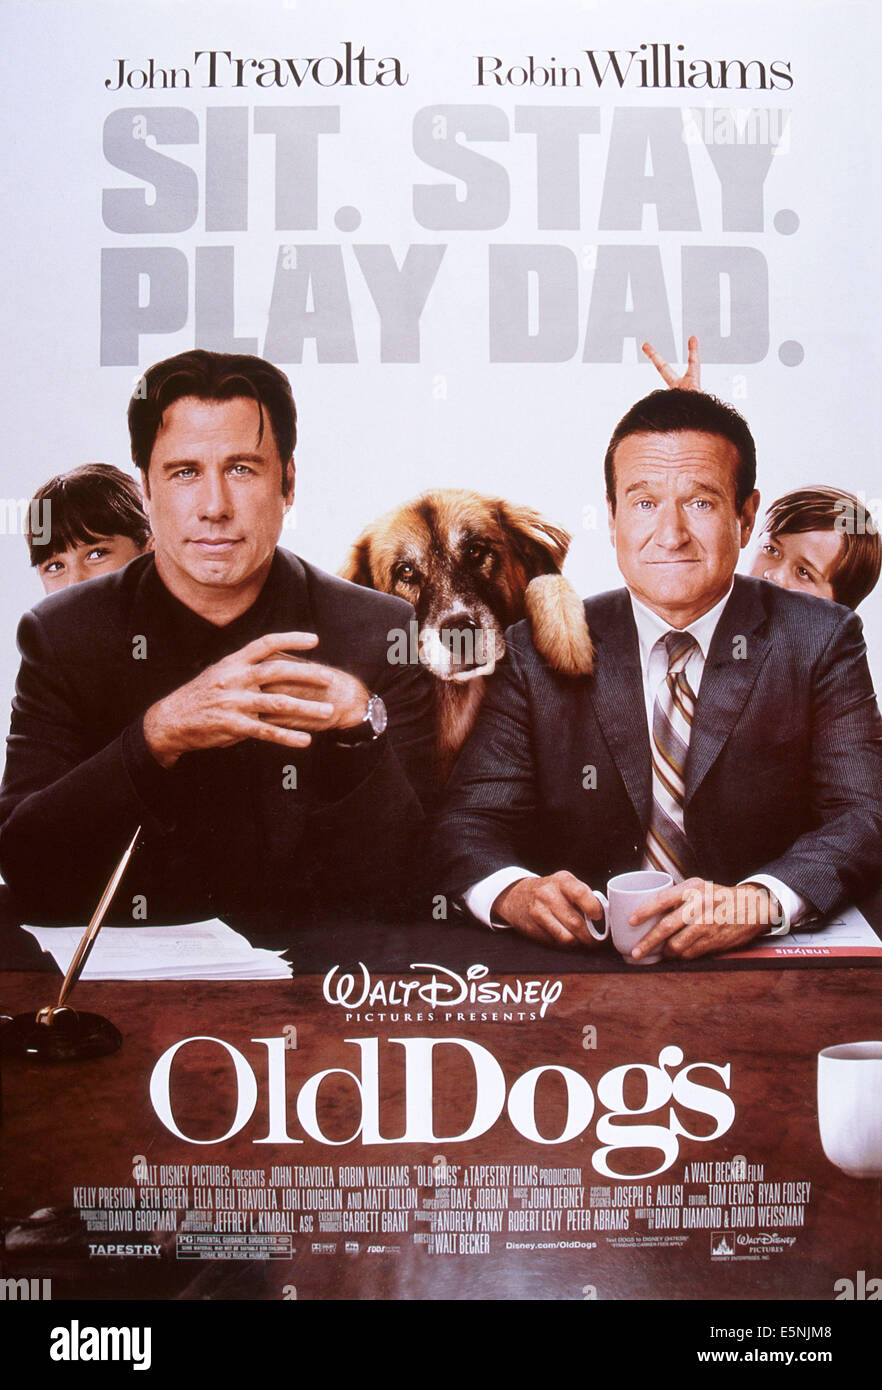 OLD DOGS, US poster, from left: Ella Bleu Travolta, John Travolta, Robin Williams, Conner Rayburn, 2009. ©Walt Disney Studios Stock Photo